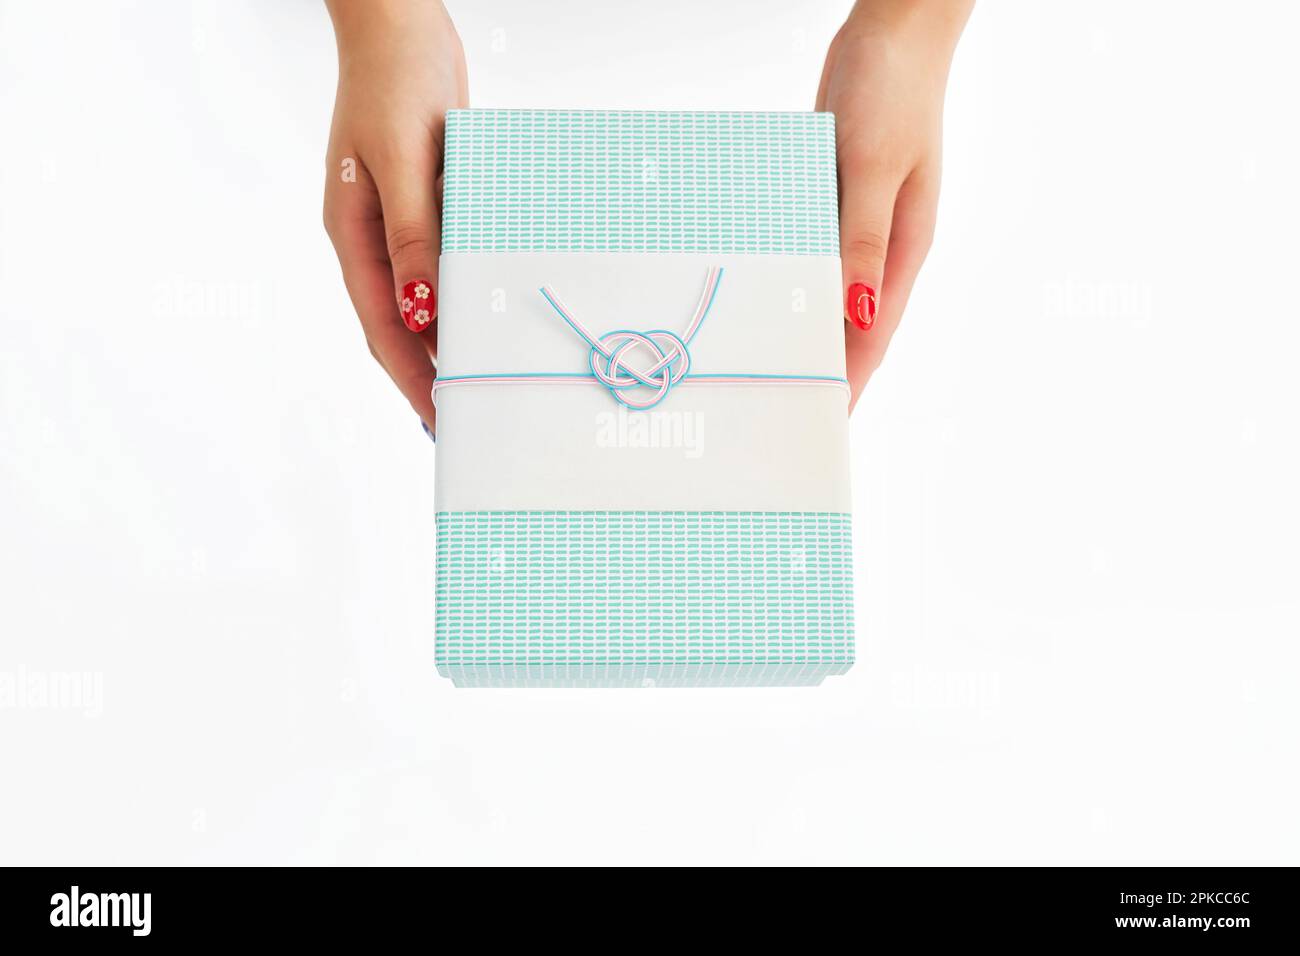 Woman holding gift box with mizuhiki decoration Stock Photo